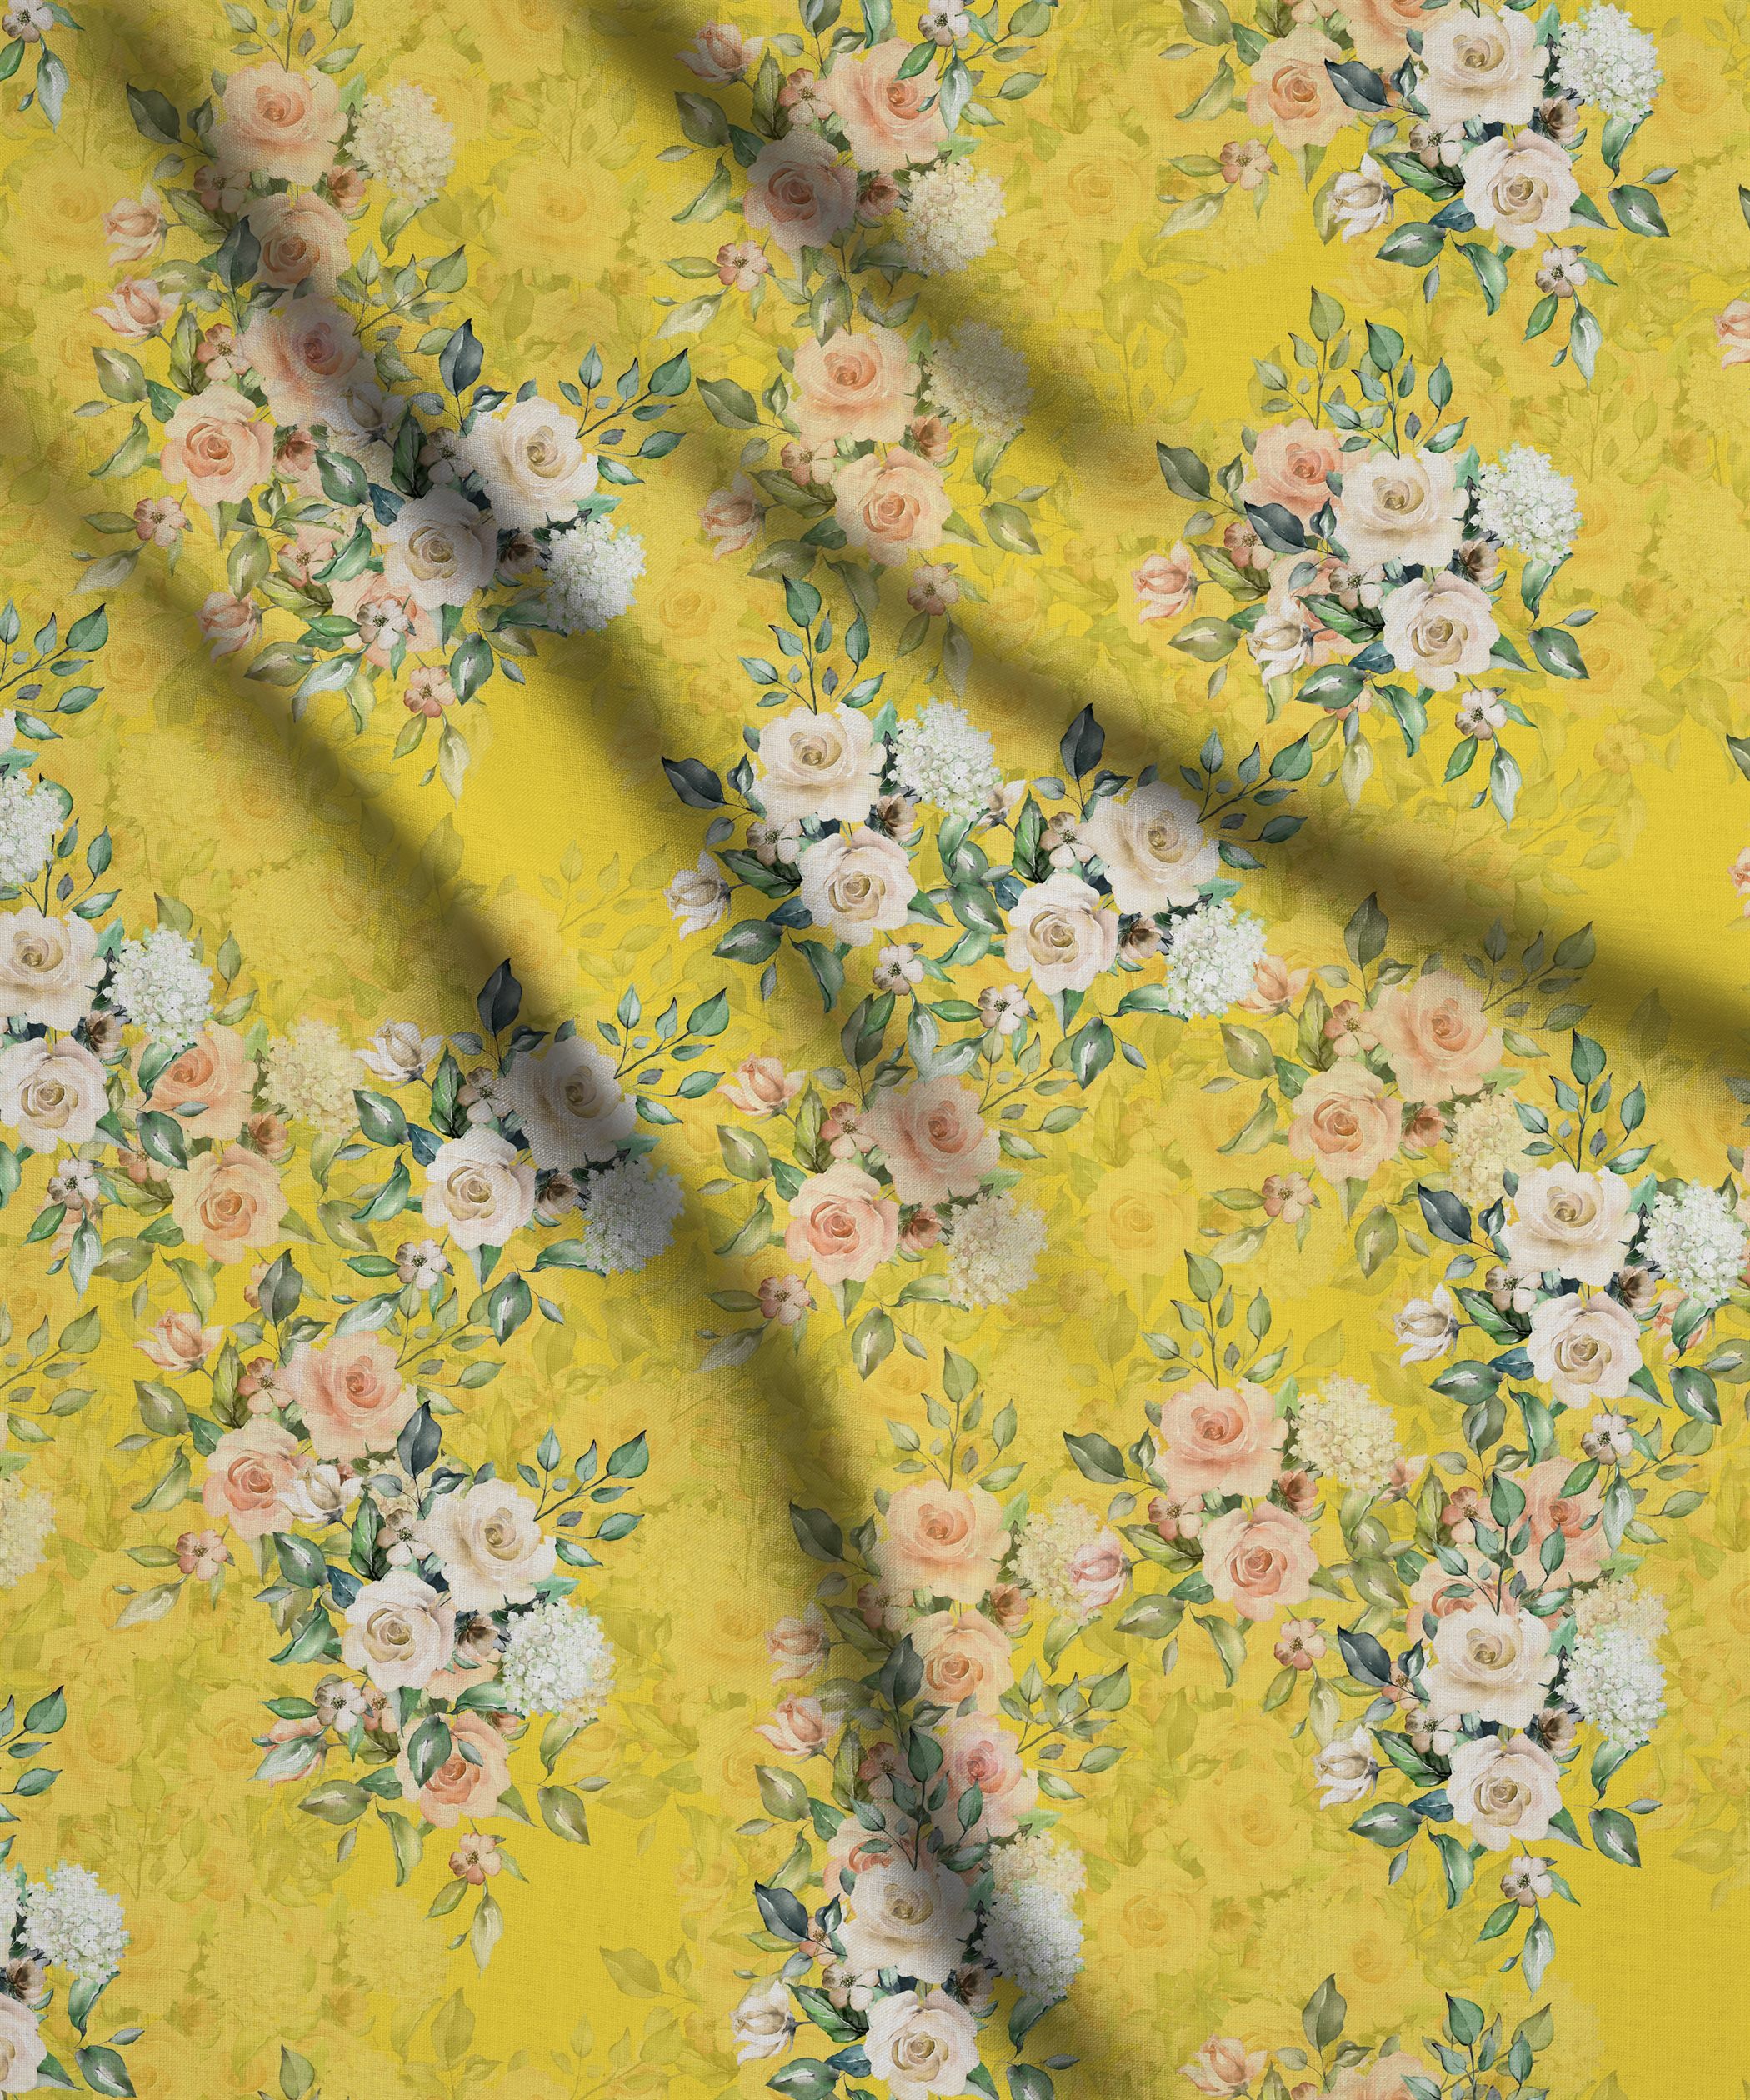 Textured Flower Bunches Print